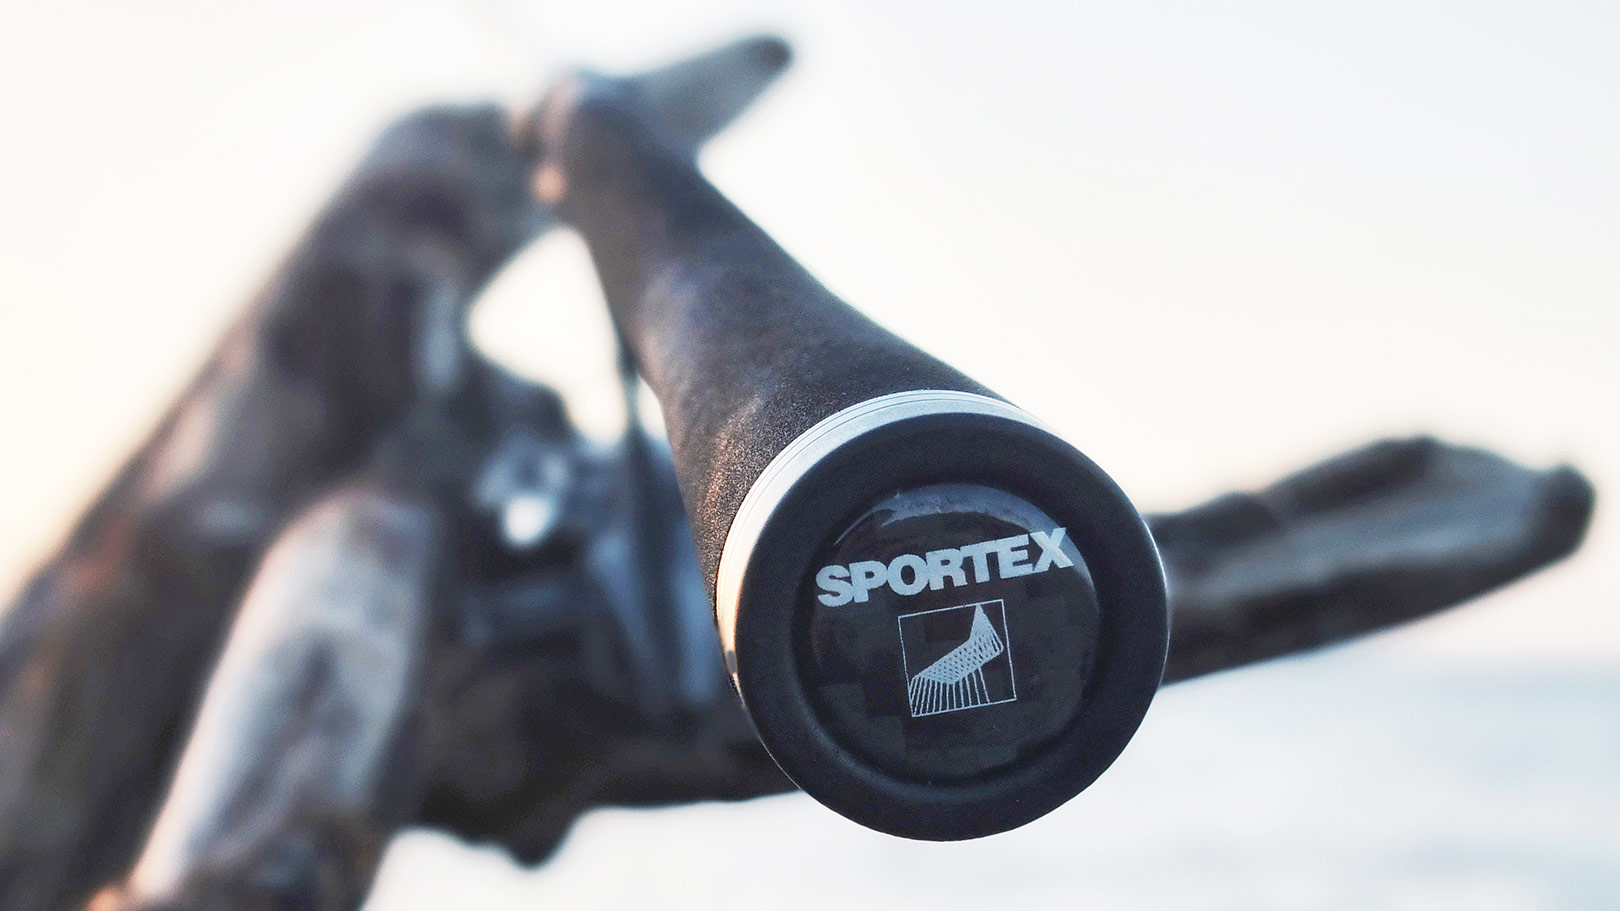 Med Seatrout Xpert serien fra Sportex får du virkelige meget kvalitet for pengene.